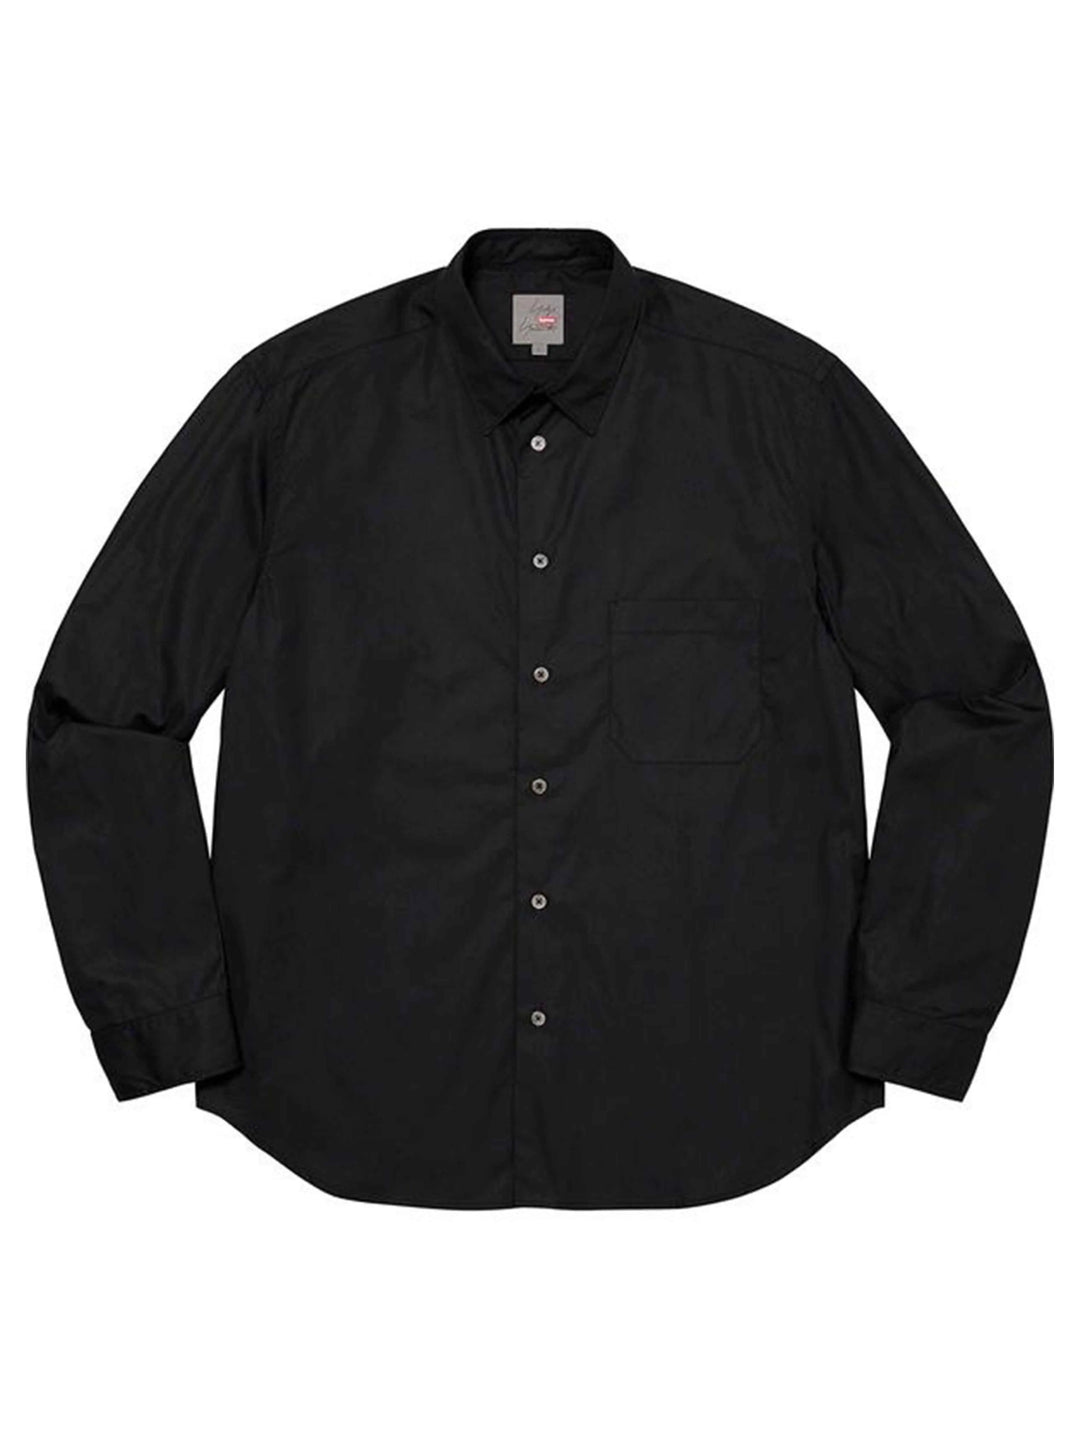 Supreme Yohji Yamamoto Shirt Black [FW20] Prior